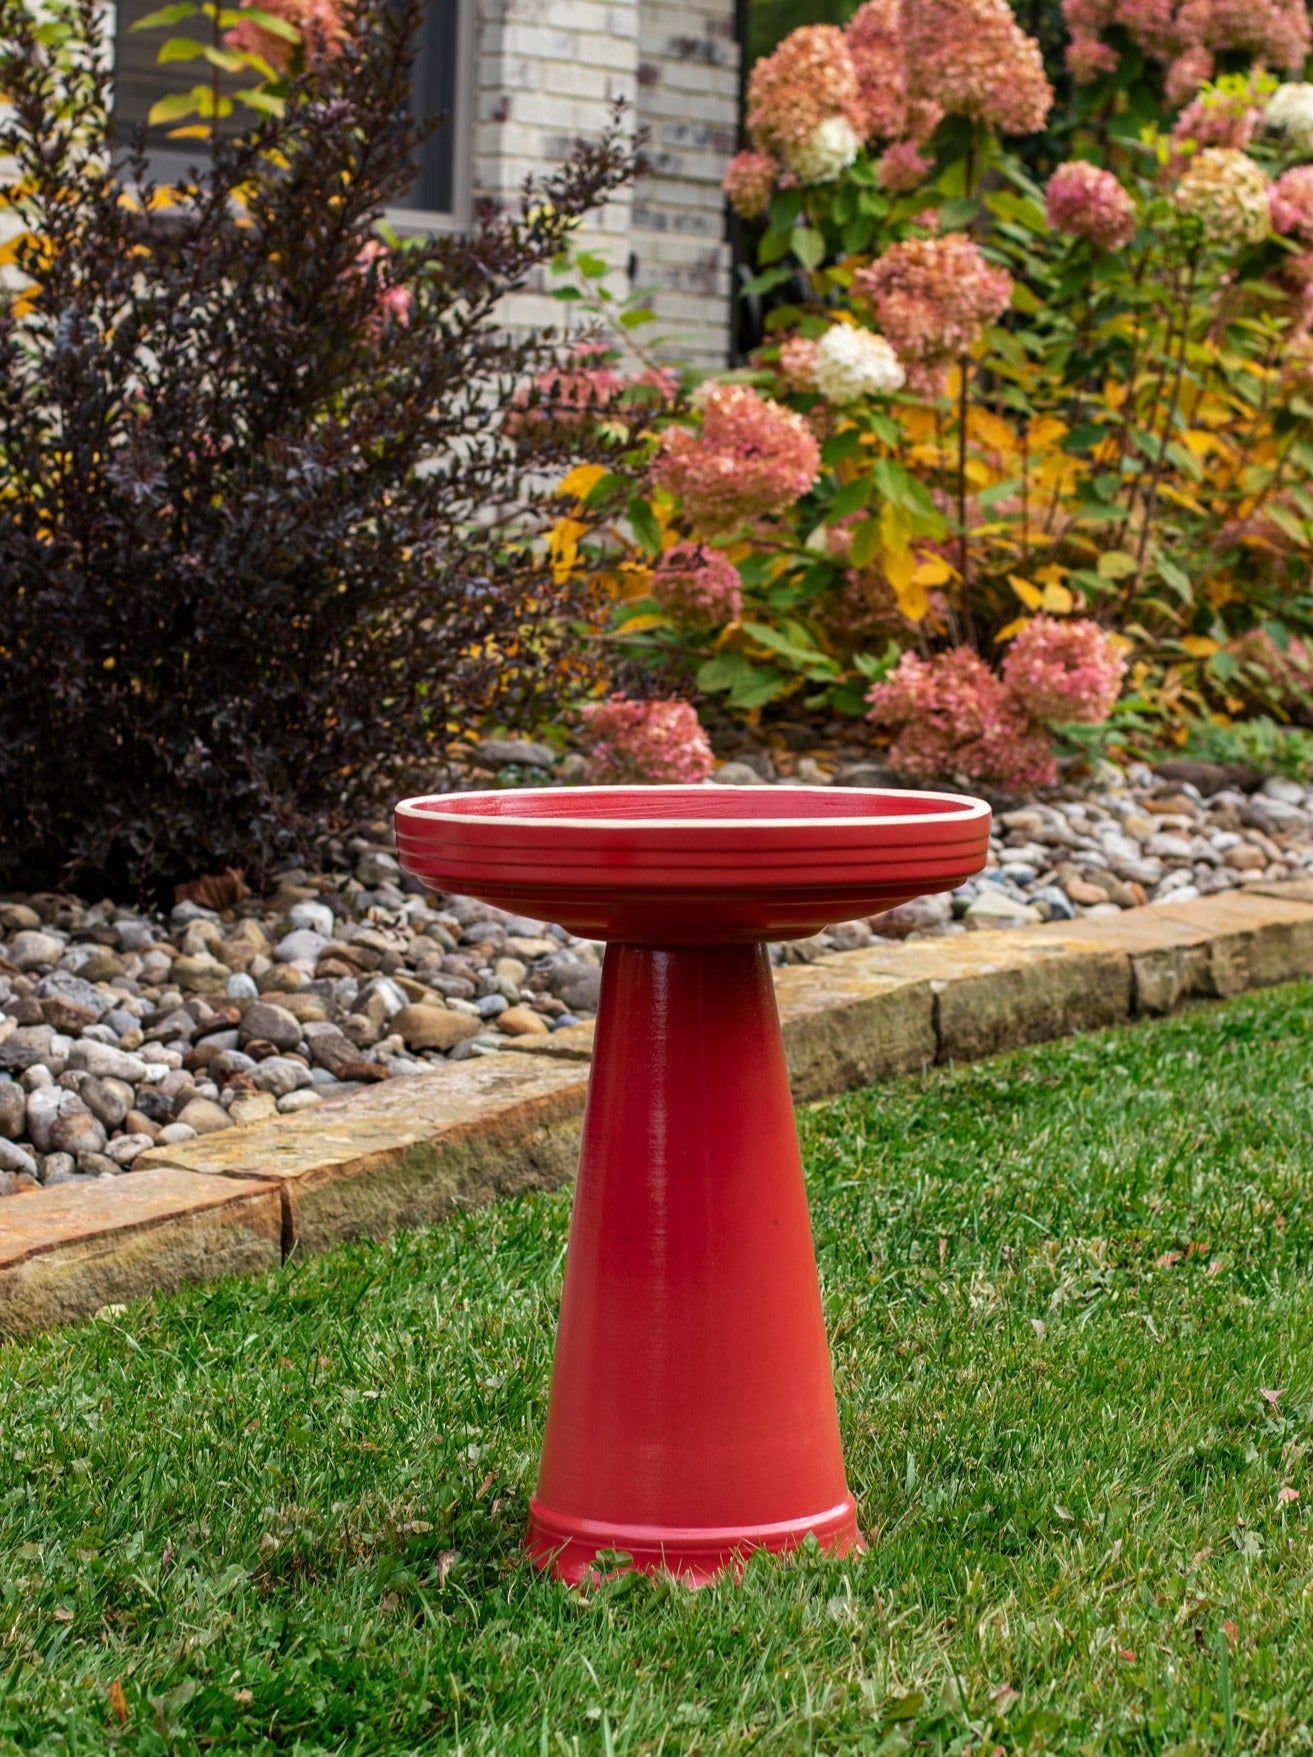 ceramic locking birdbath set in red glaze in a landscaped garden setting